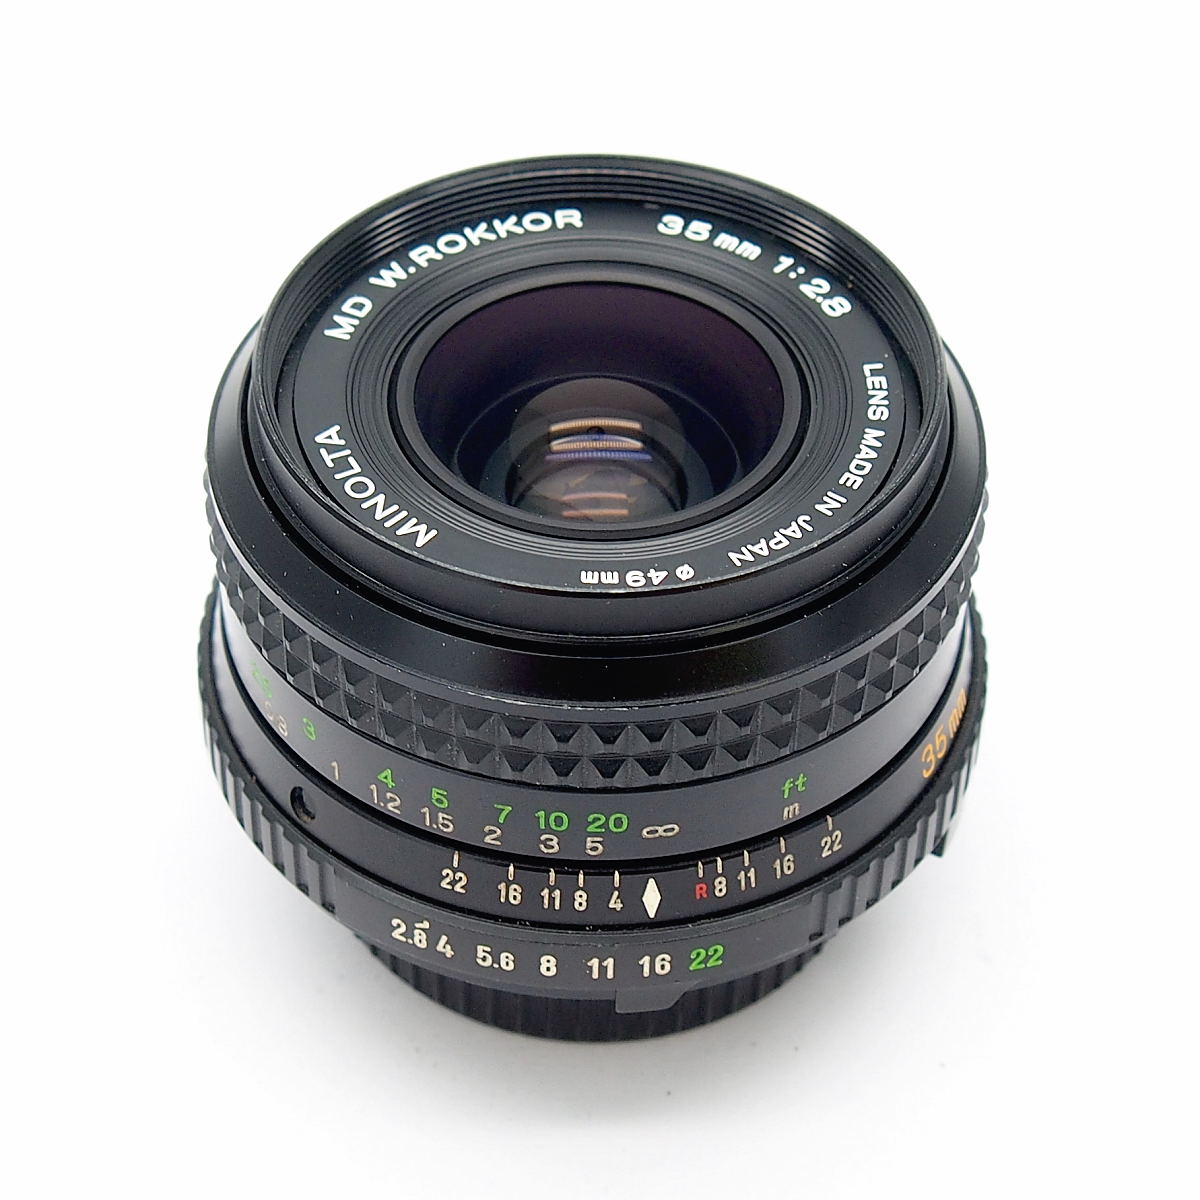 Minolta MD 35mm F2.8 Wide Angle Lens #8955